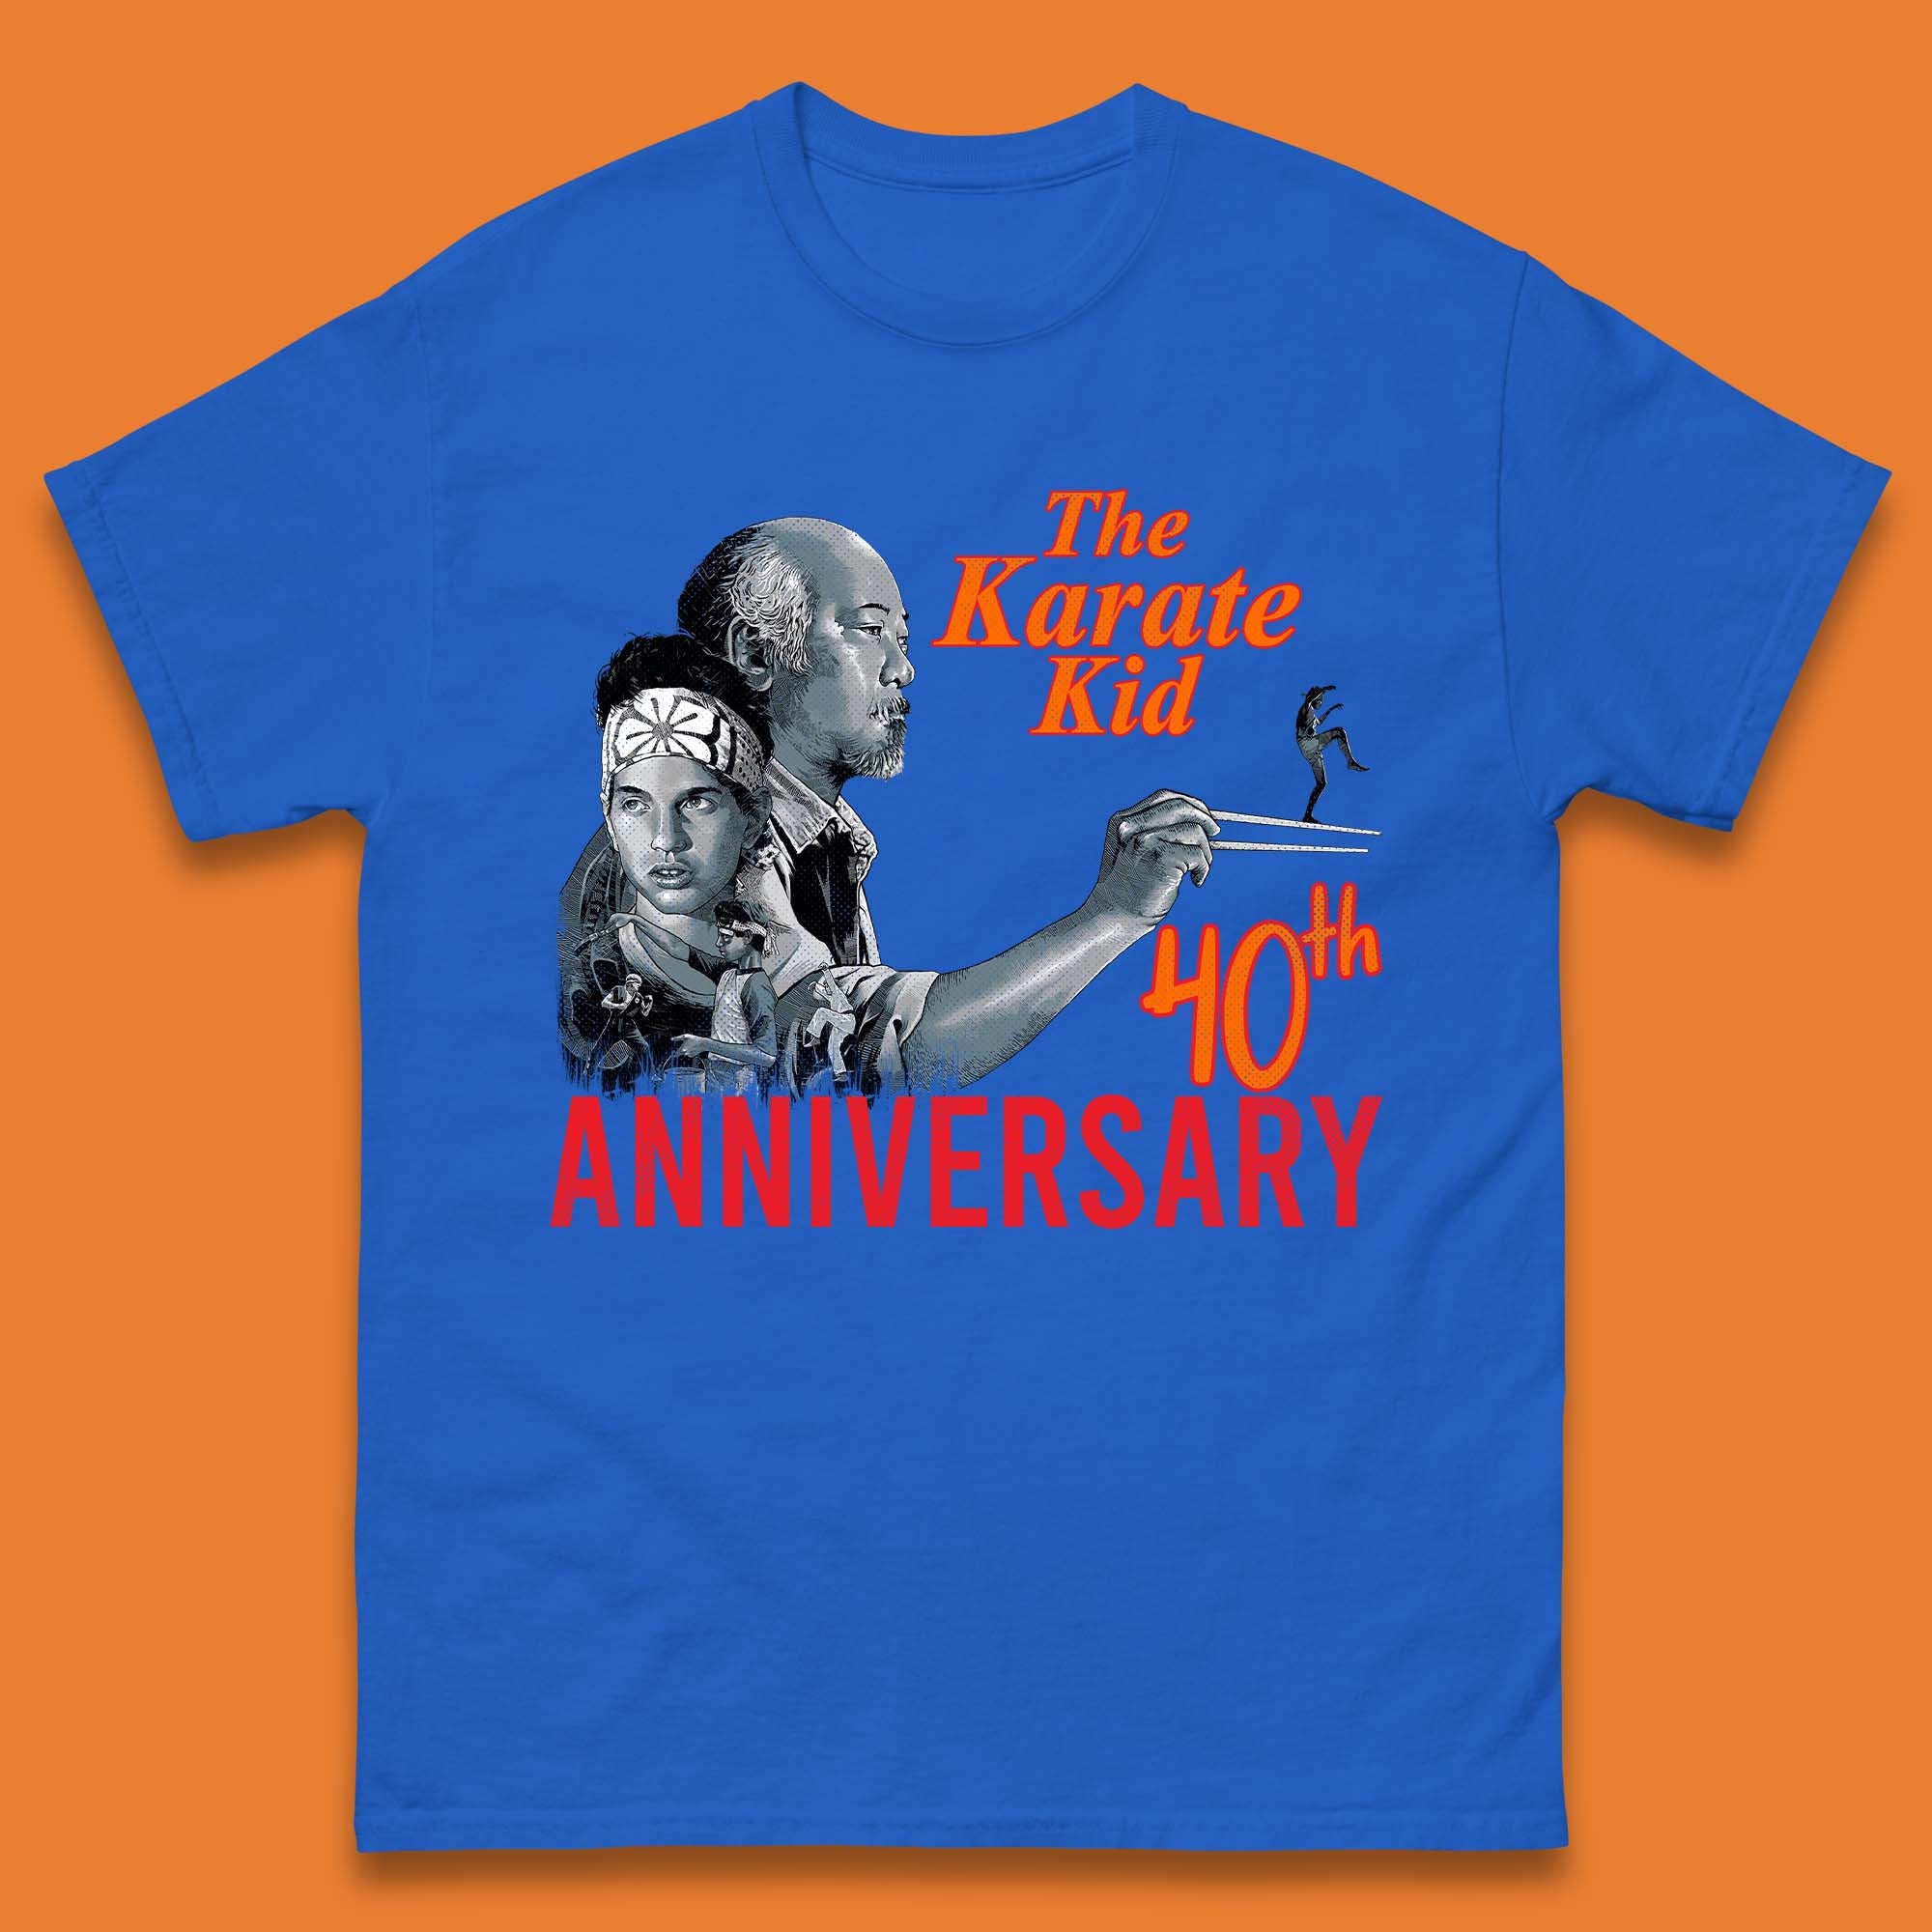 The Karate Kid 40th Anniversary Mens T-Shirt